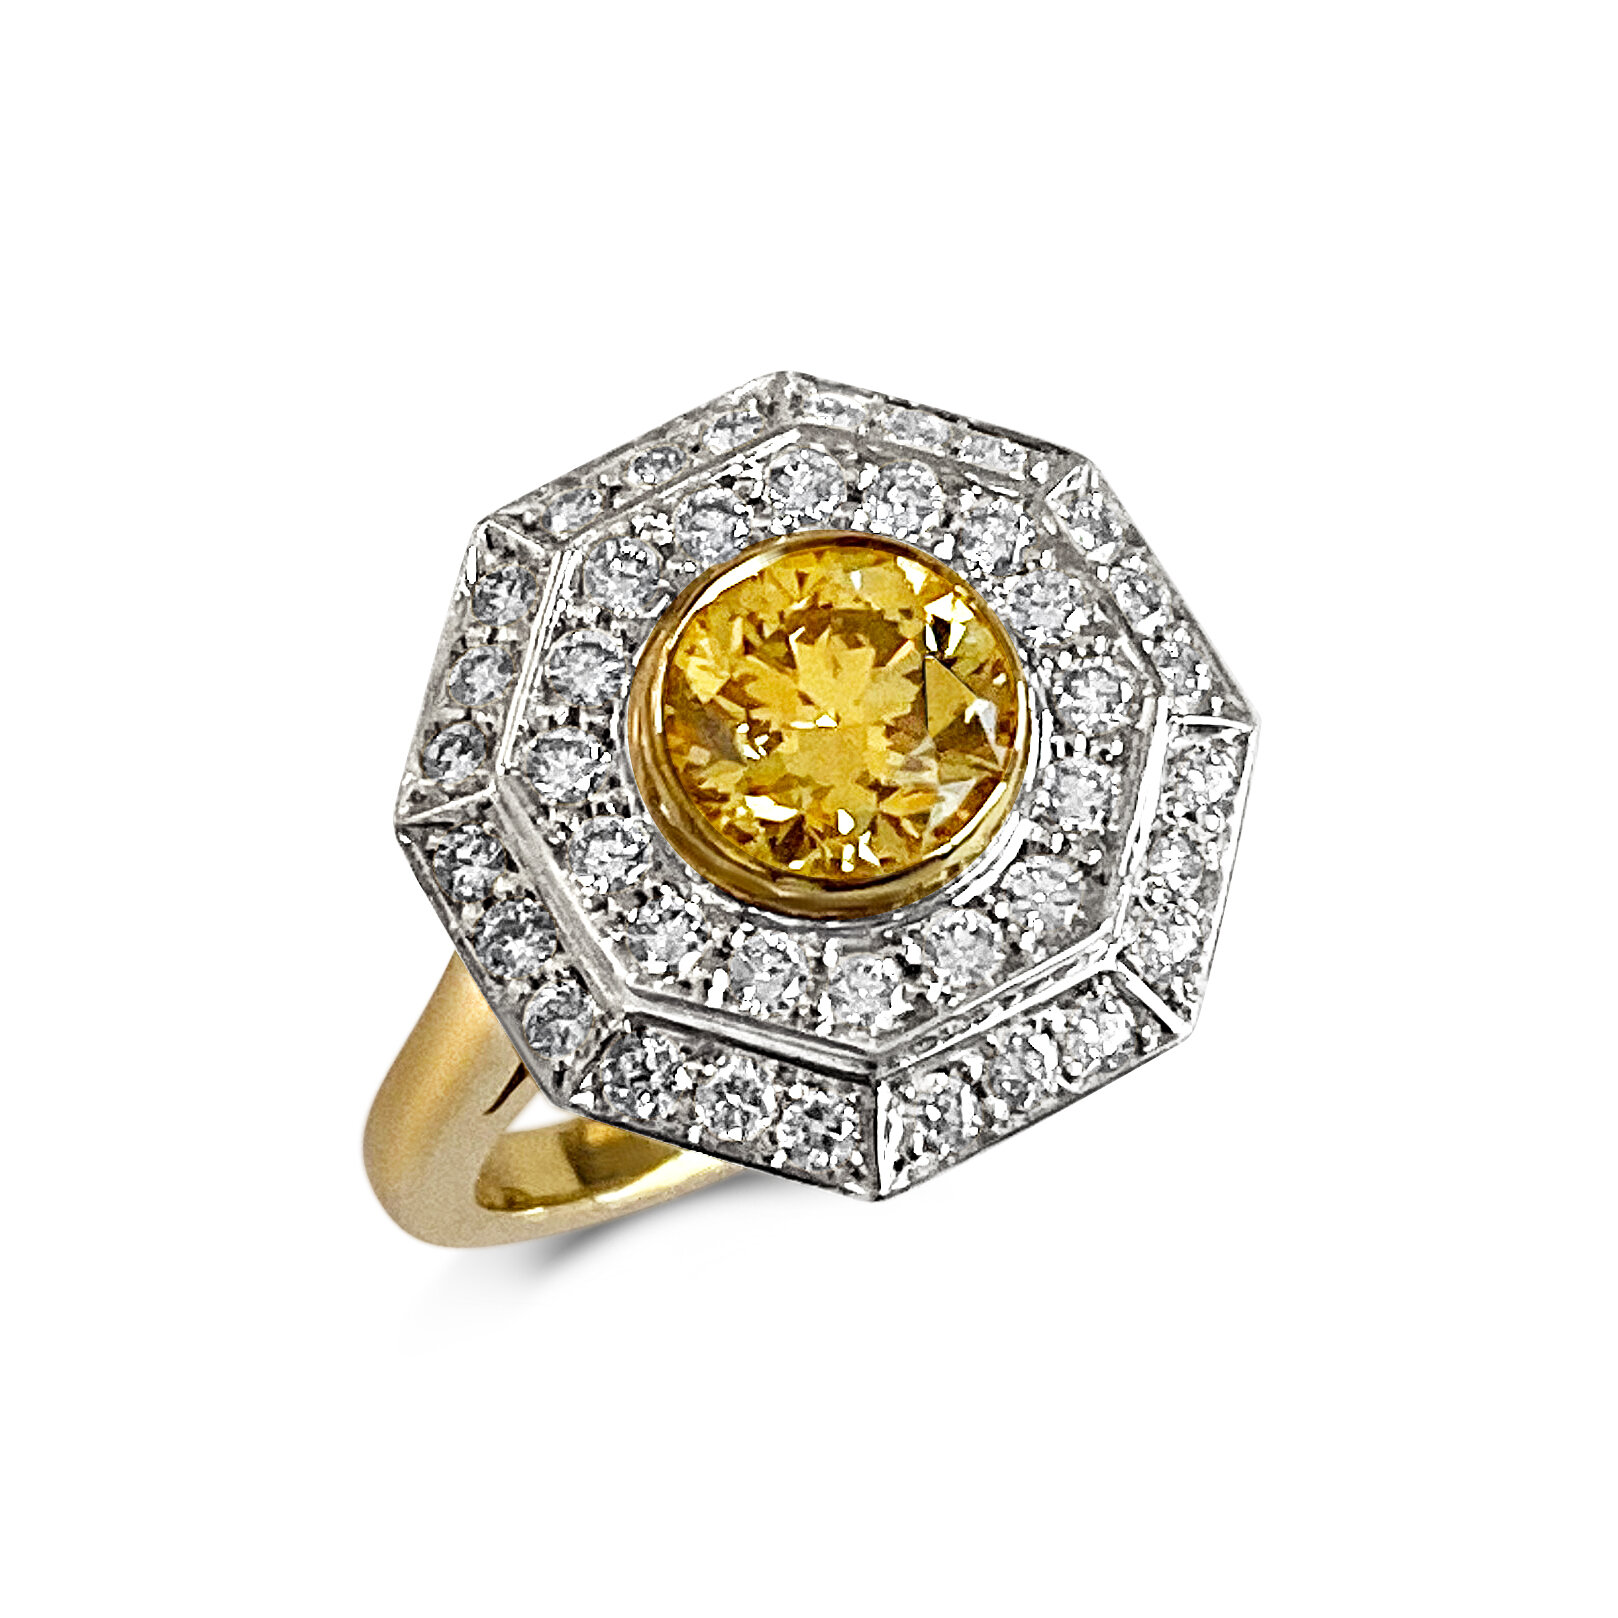 Fancy yellow diamond target ring